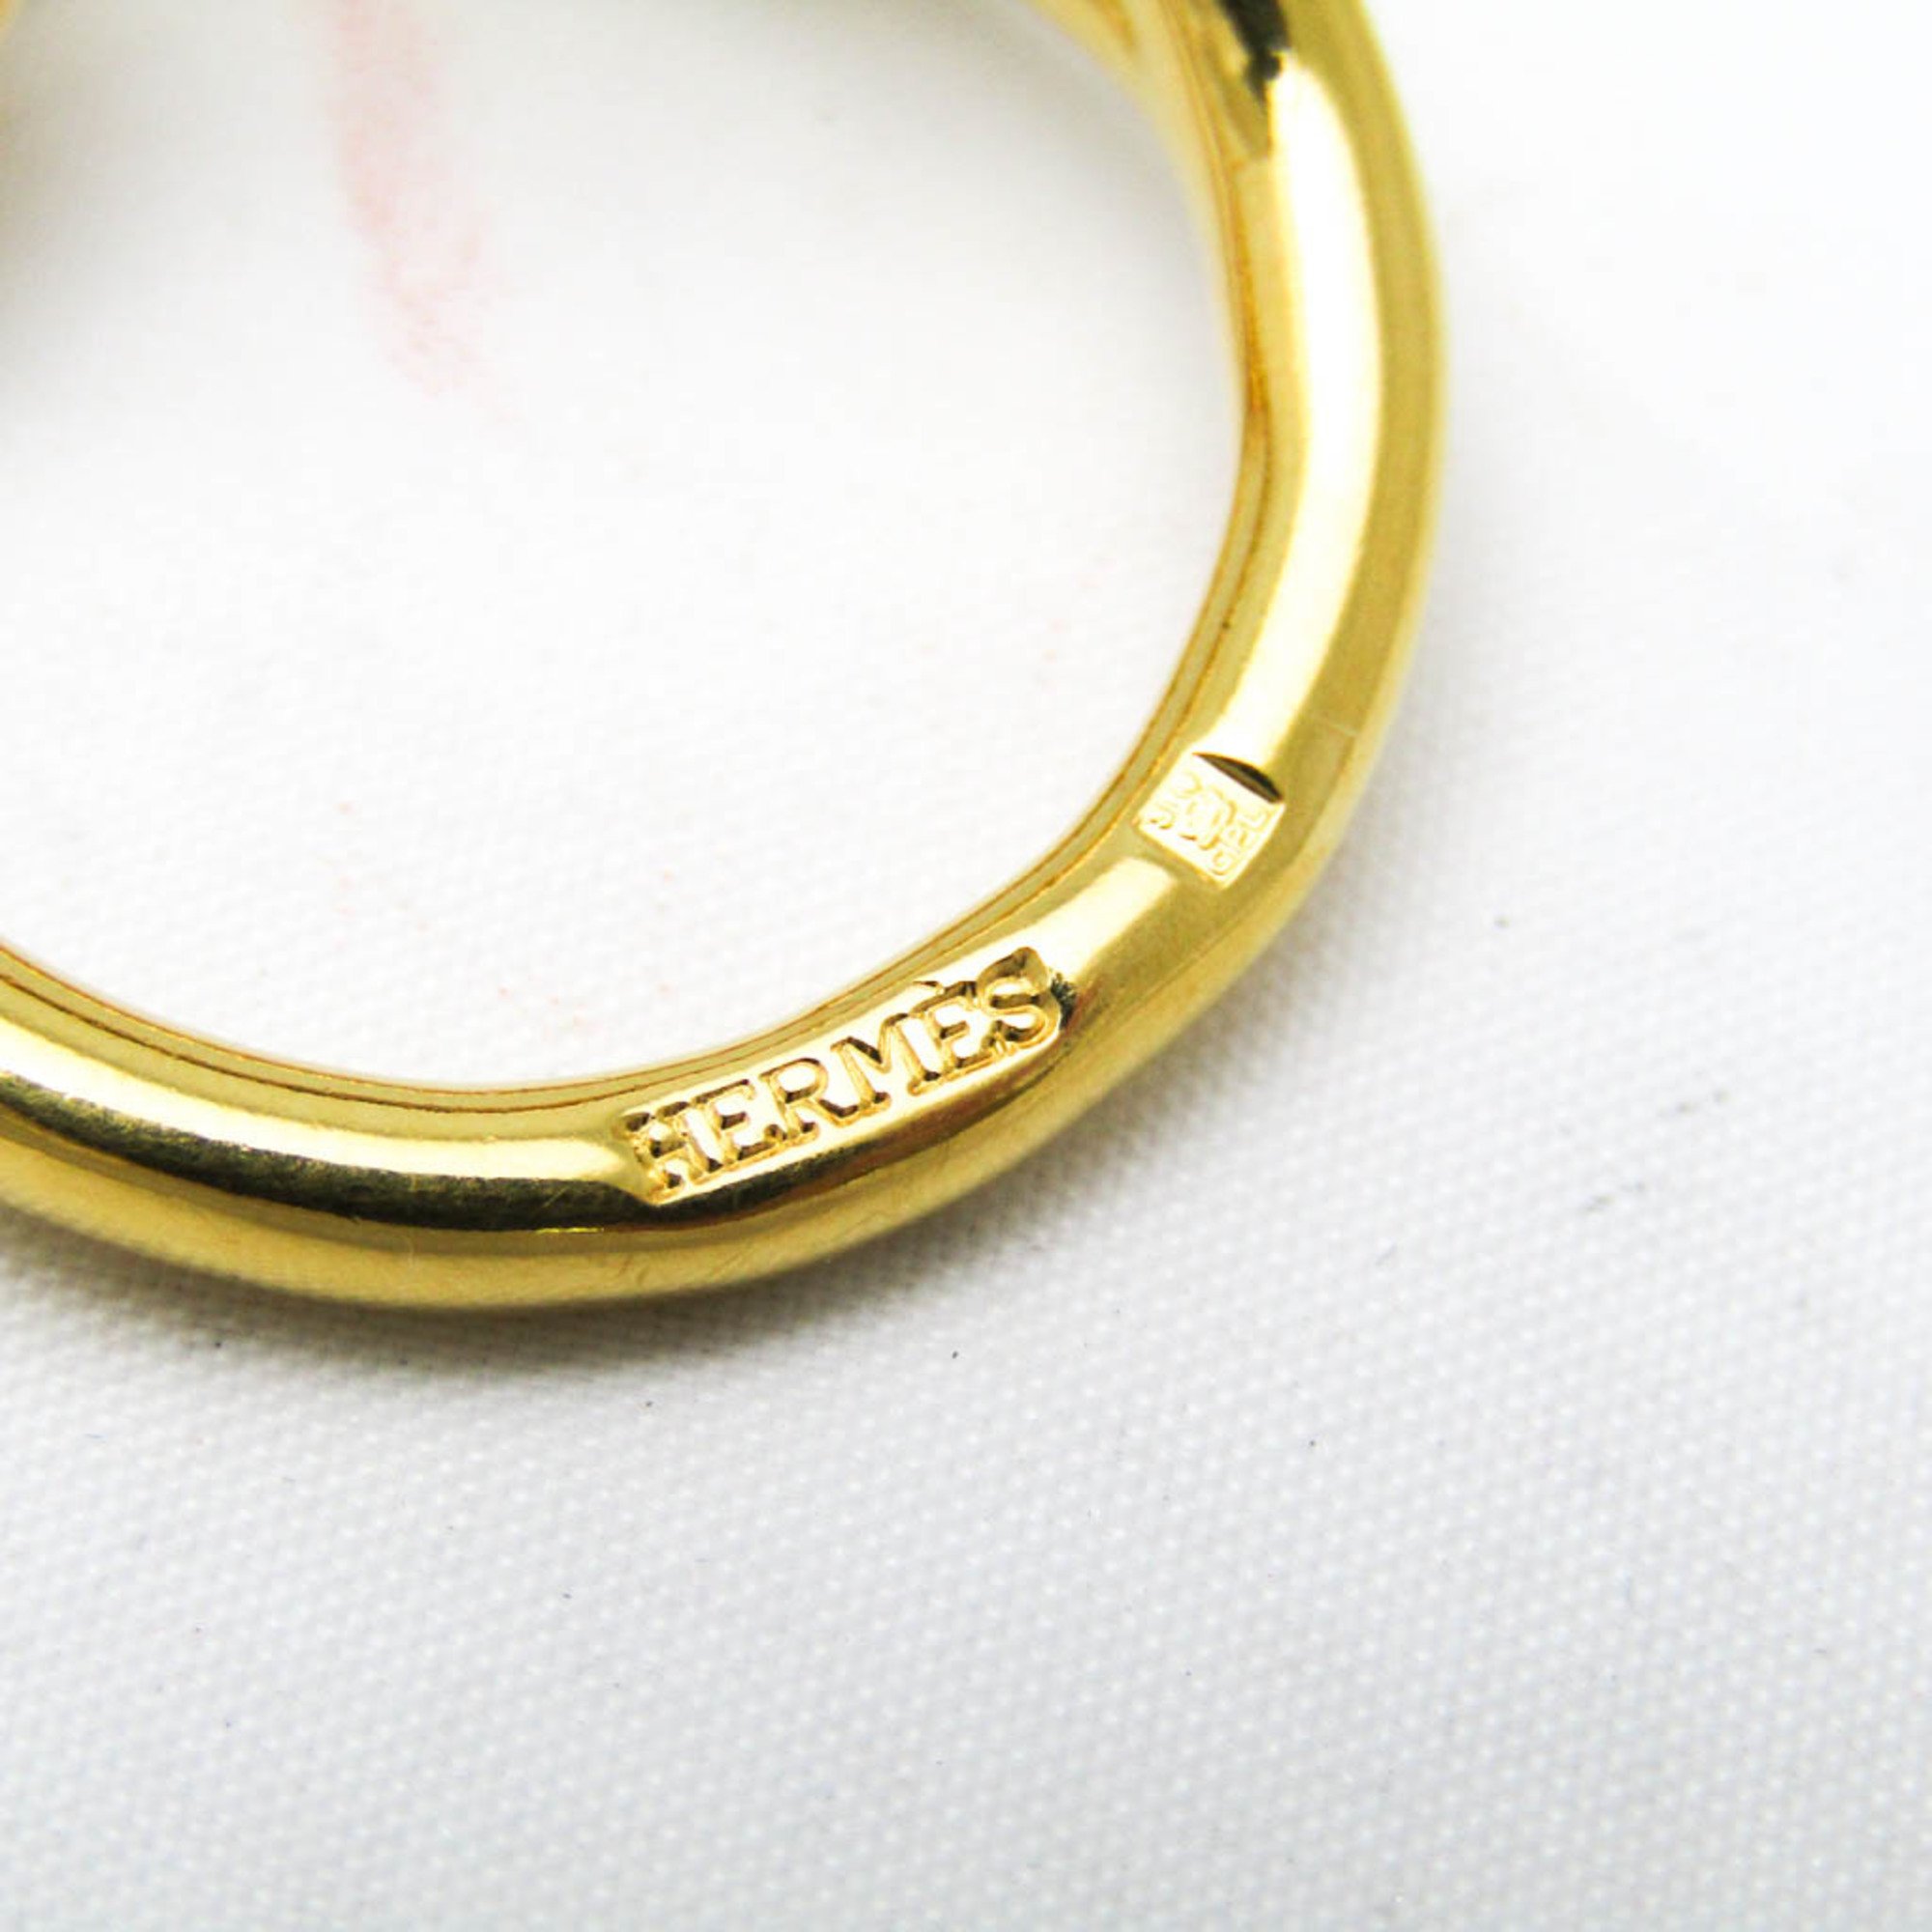 Hermes Metal Scarf Ring Gold jumbo